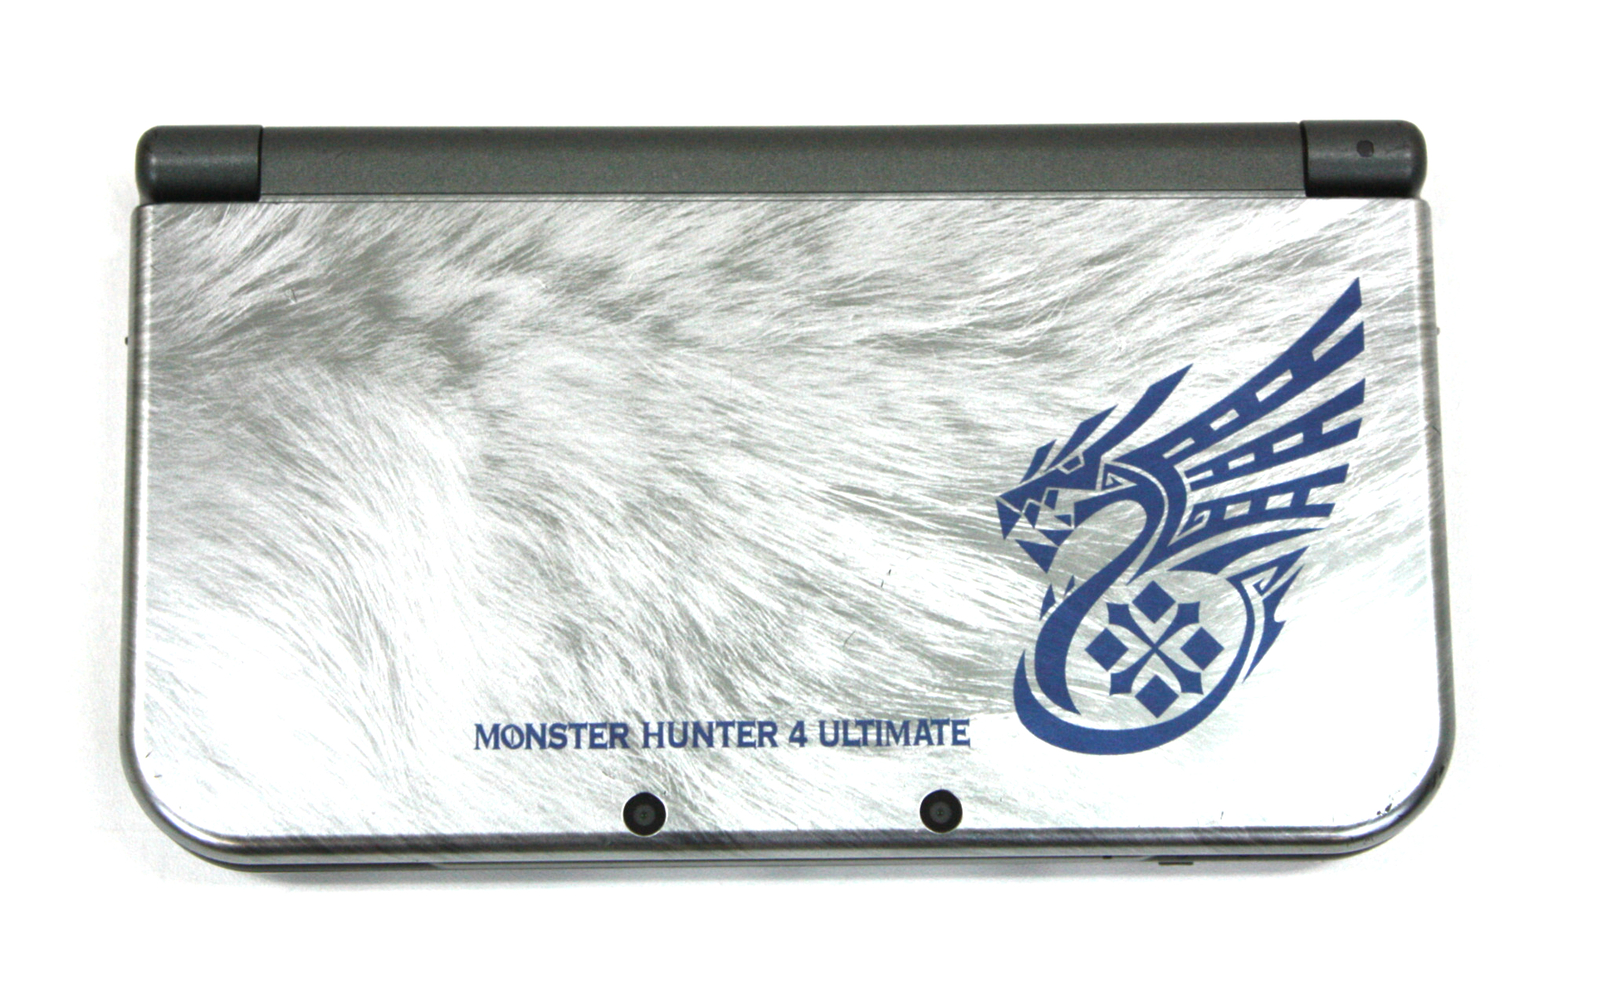 NEW 3DS XL Monster Hunter 4